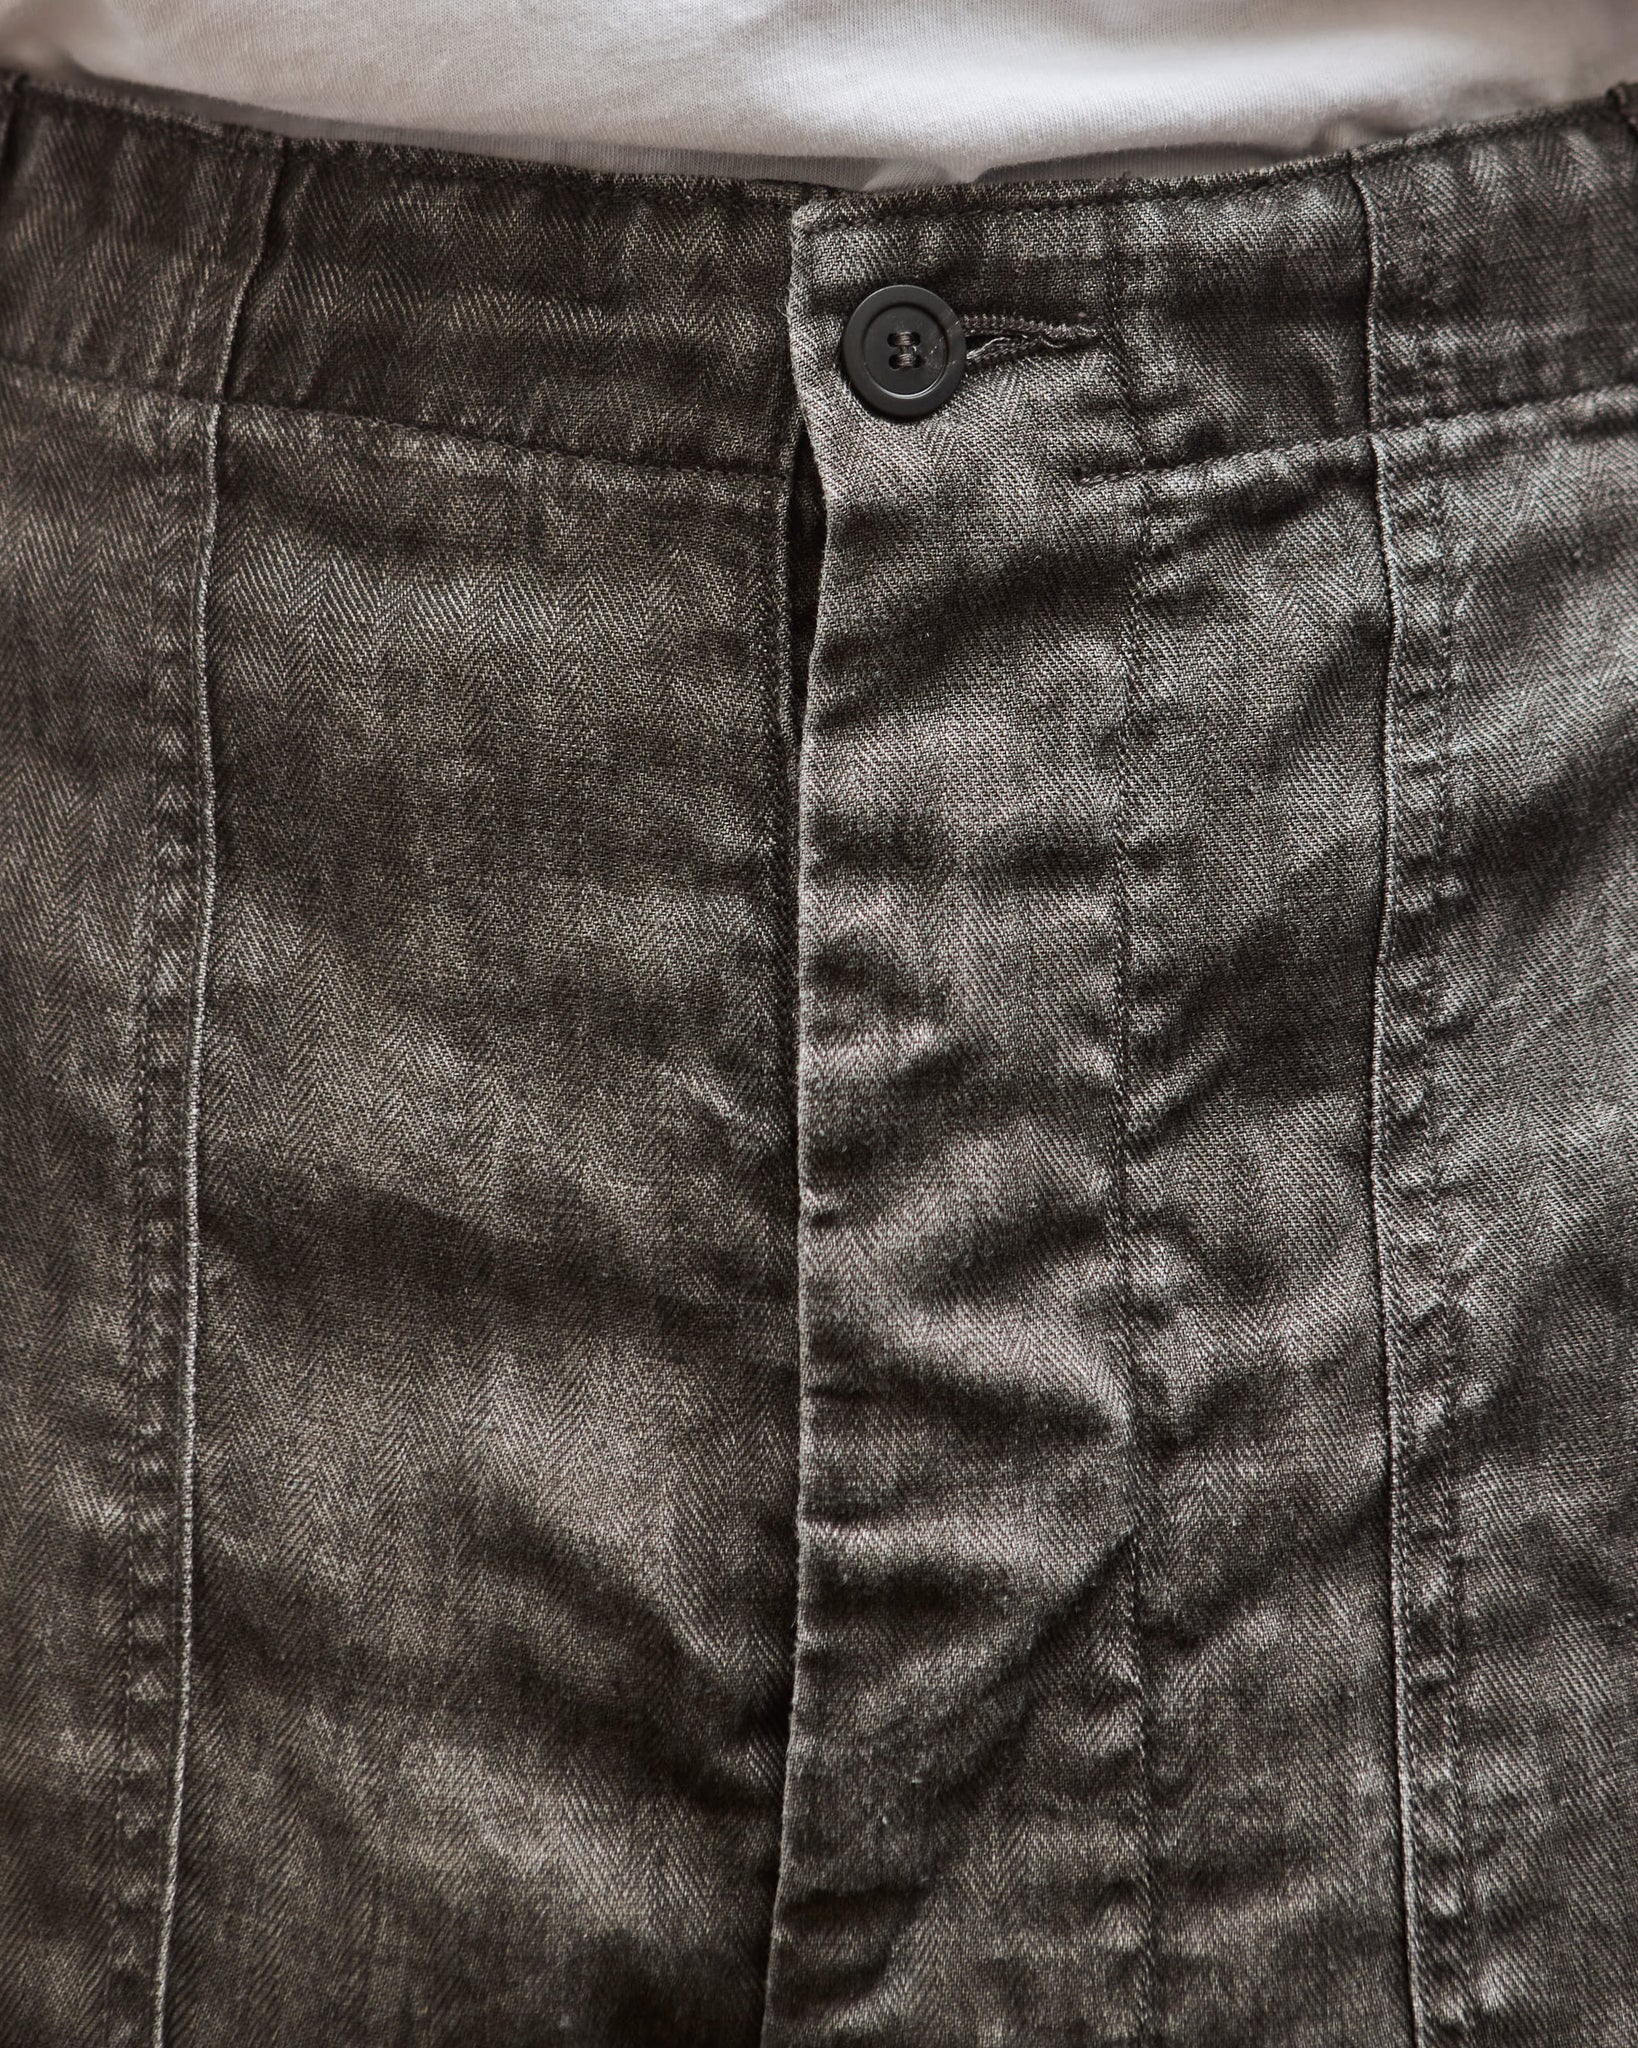 orSlow Summer Fatigue Pants, Charcoal Gray